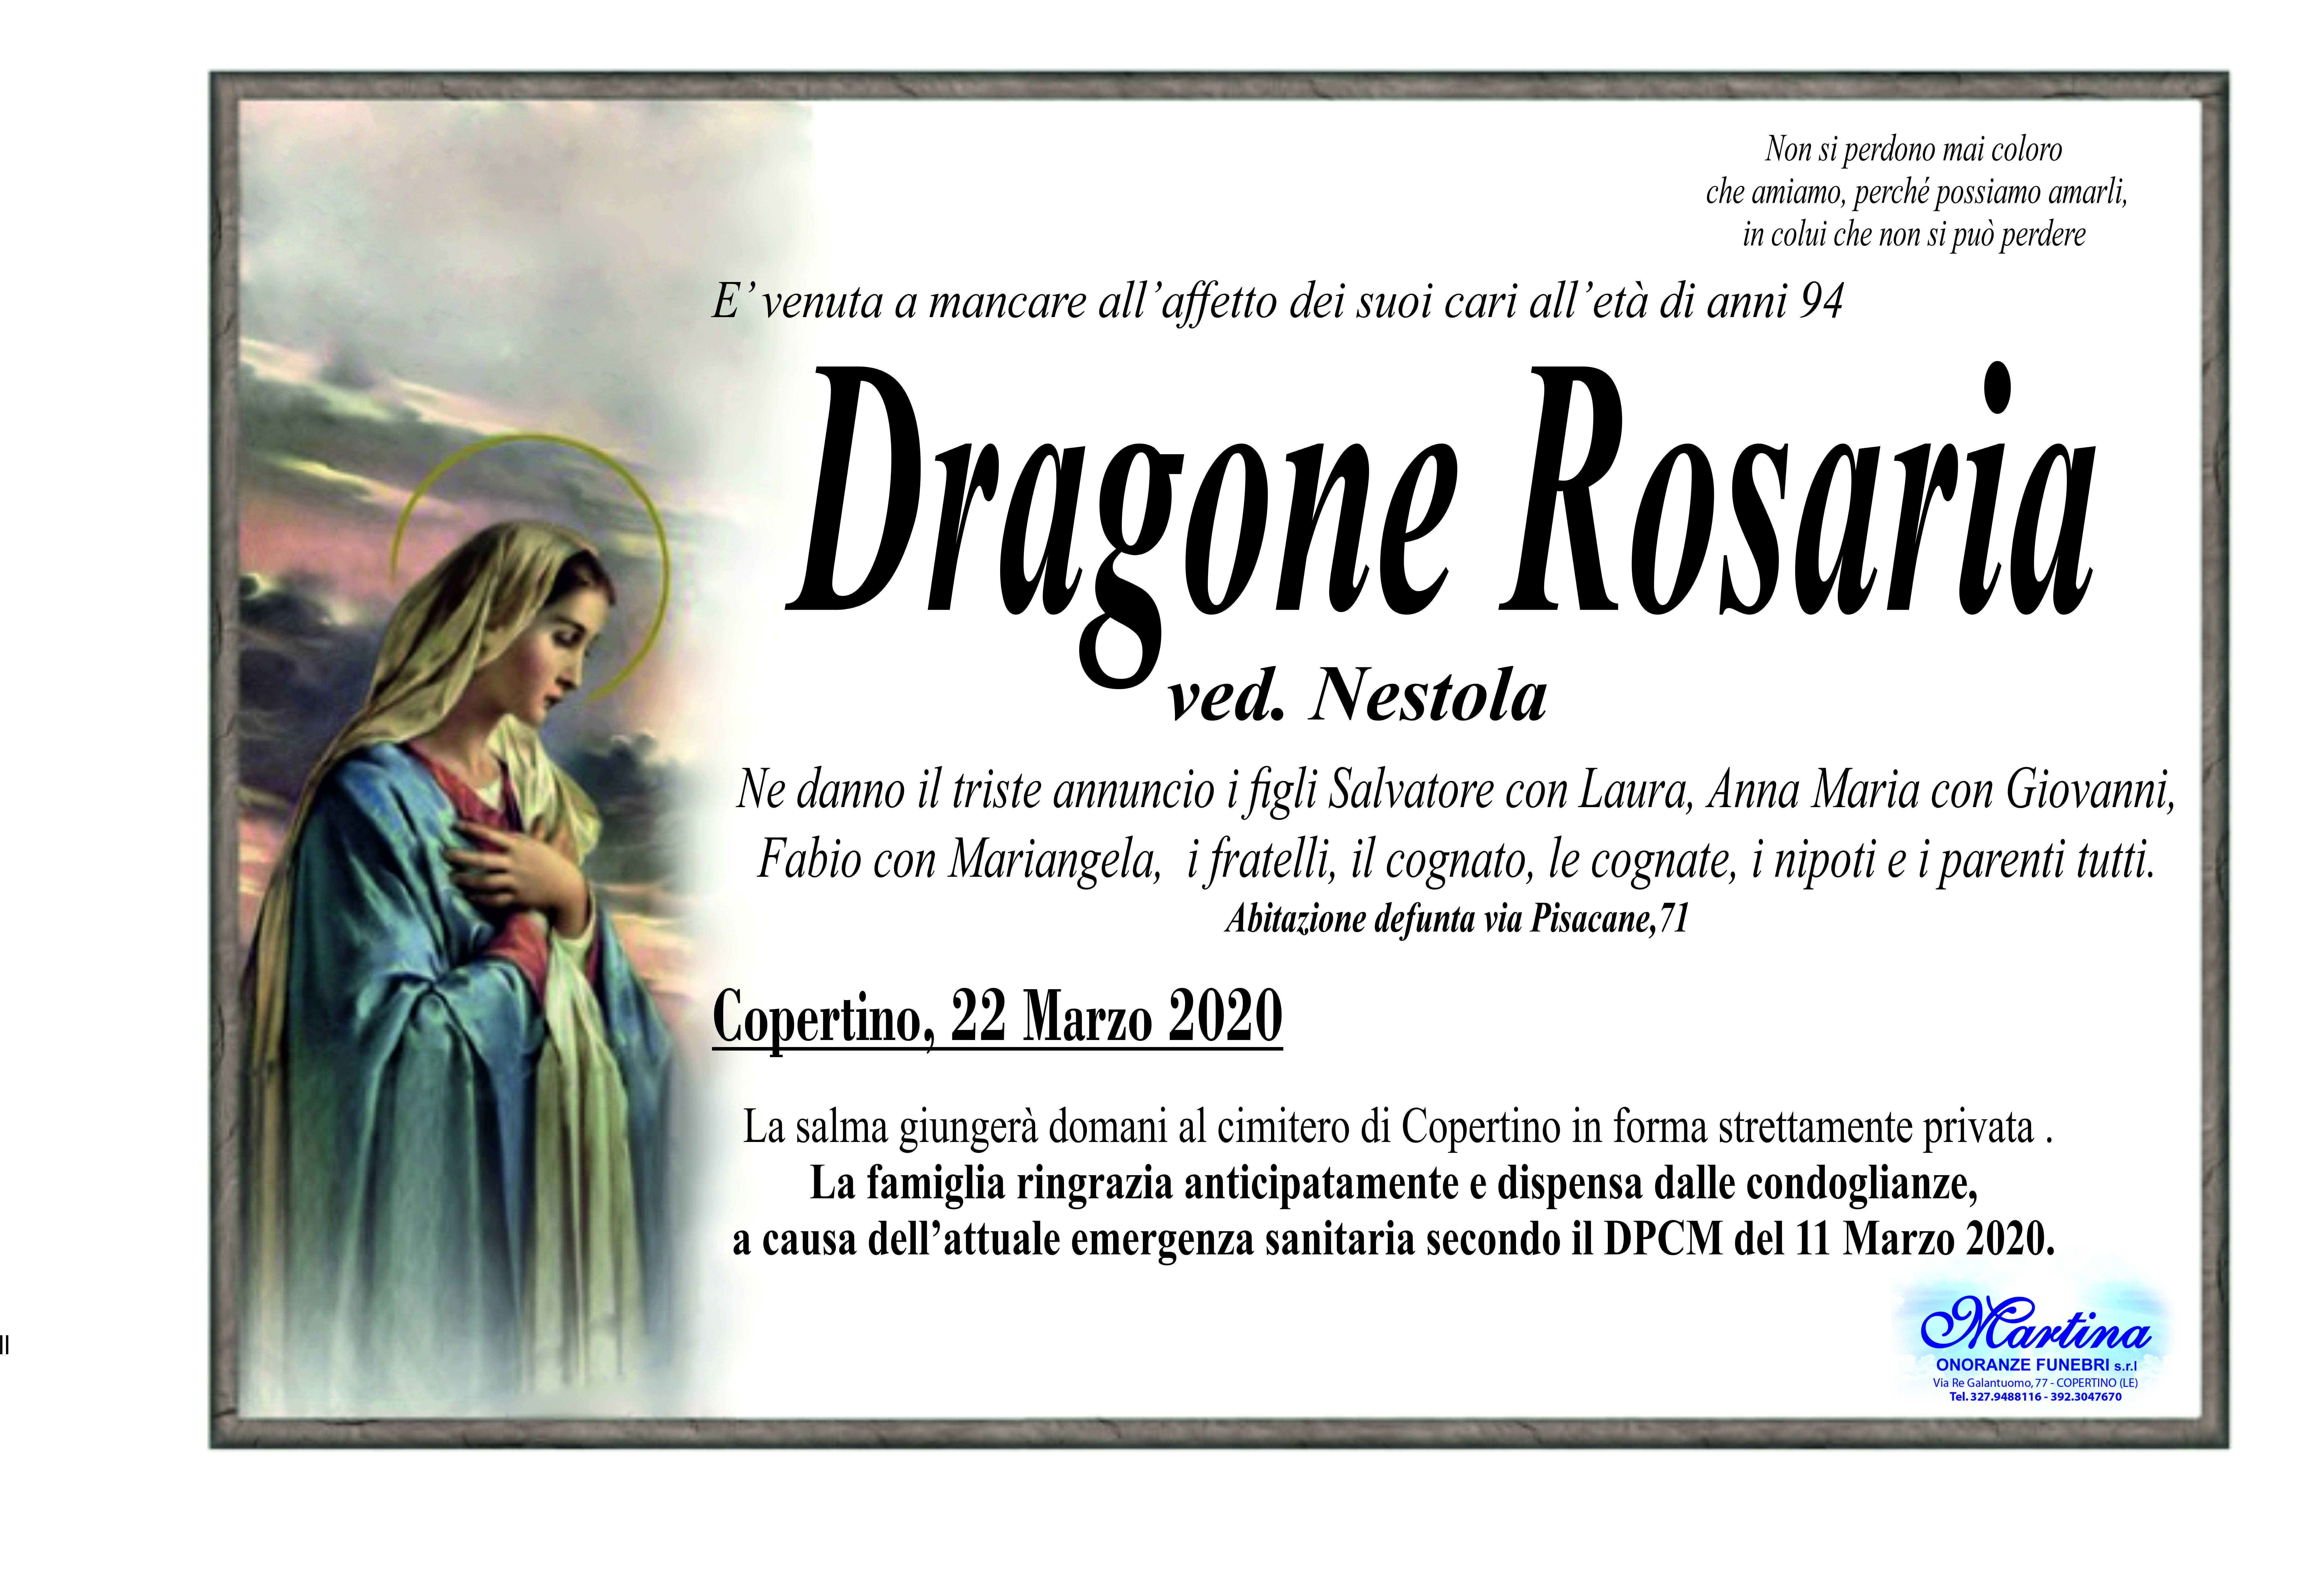 Rosaria Dragone